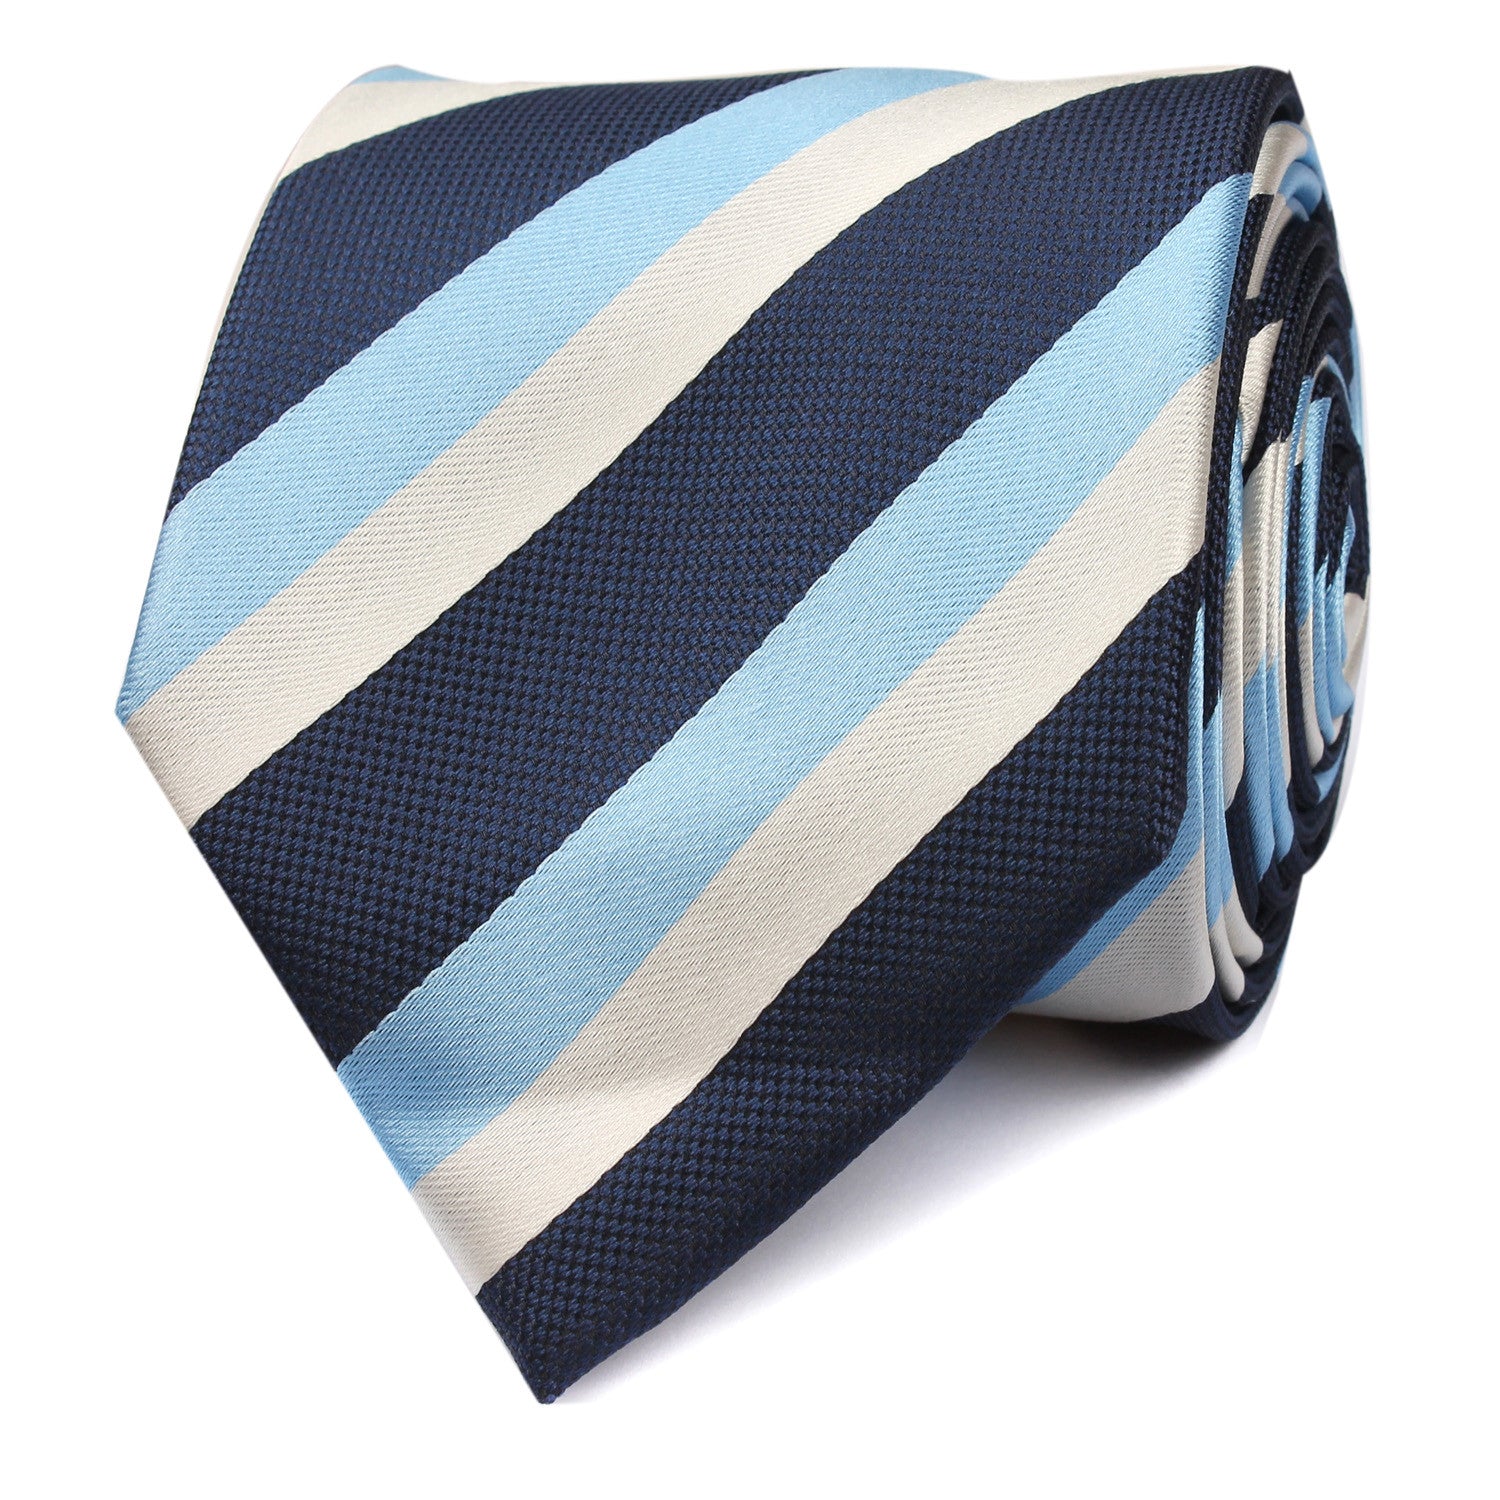 White Navy and Light Blue Striped Skinny Tie OTAA roll